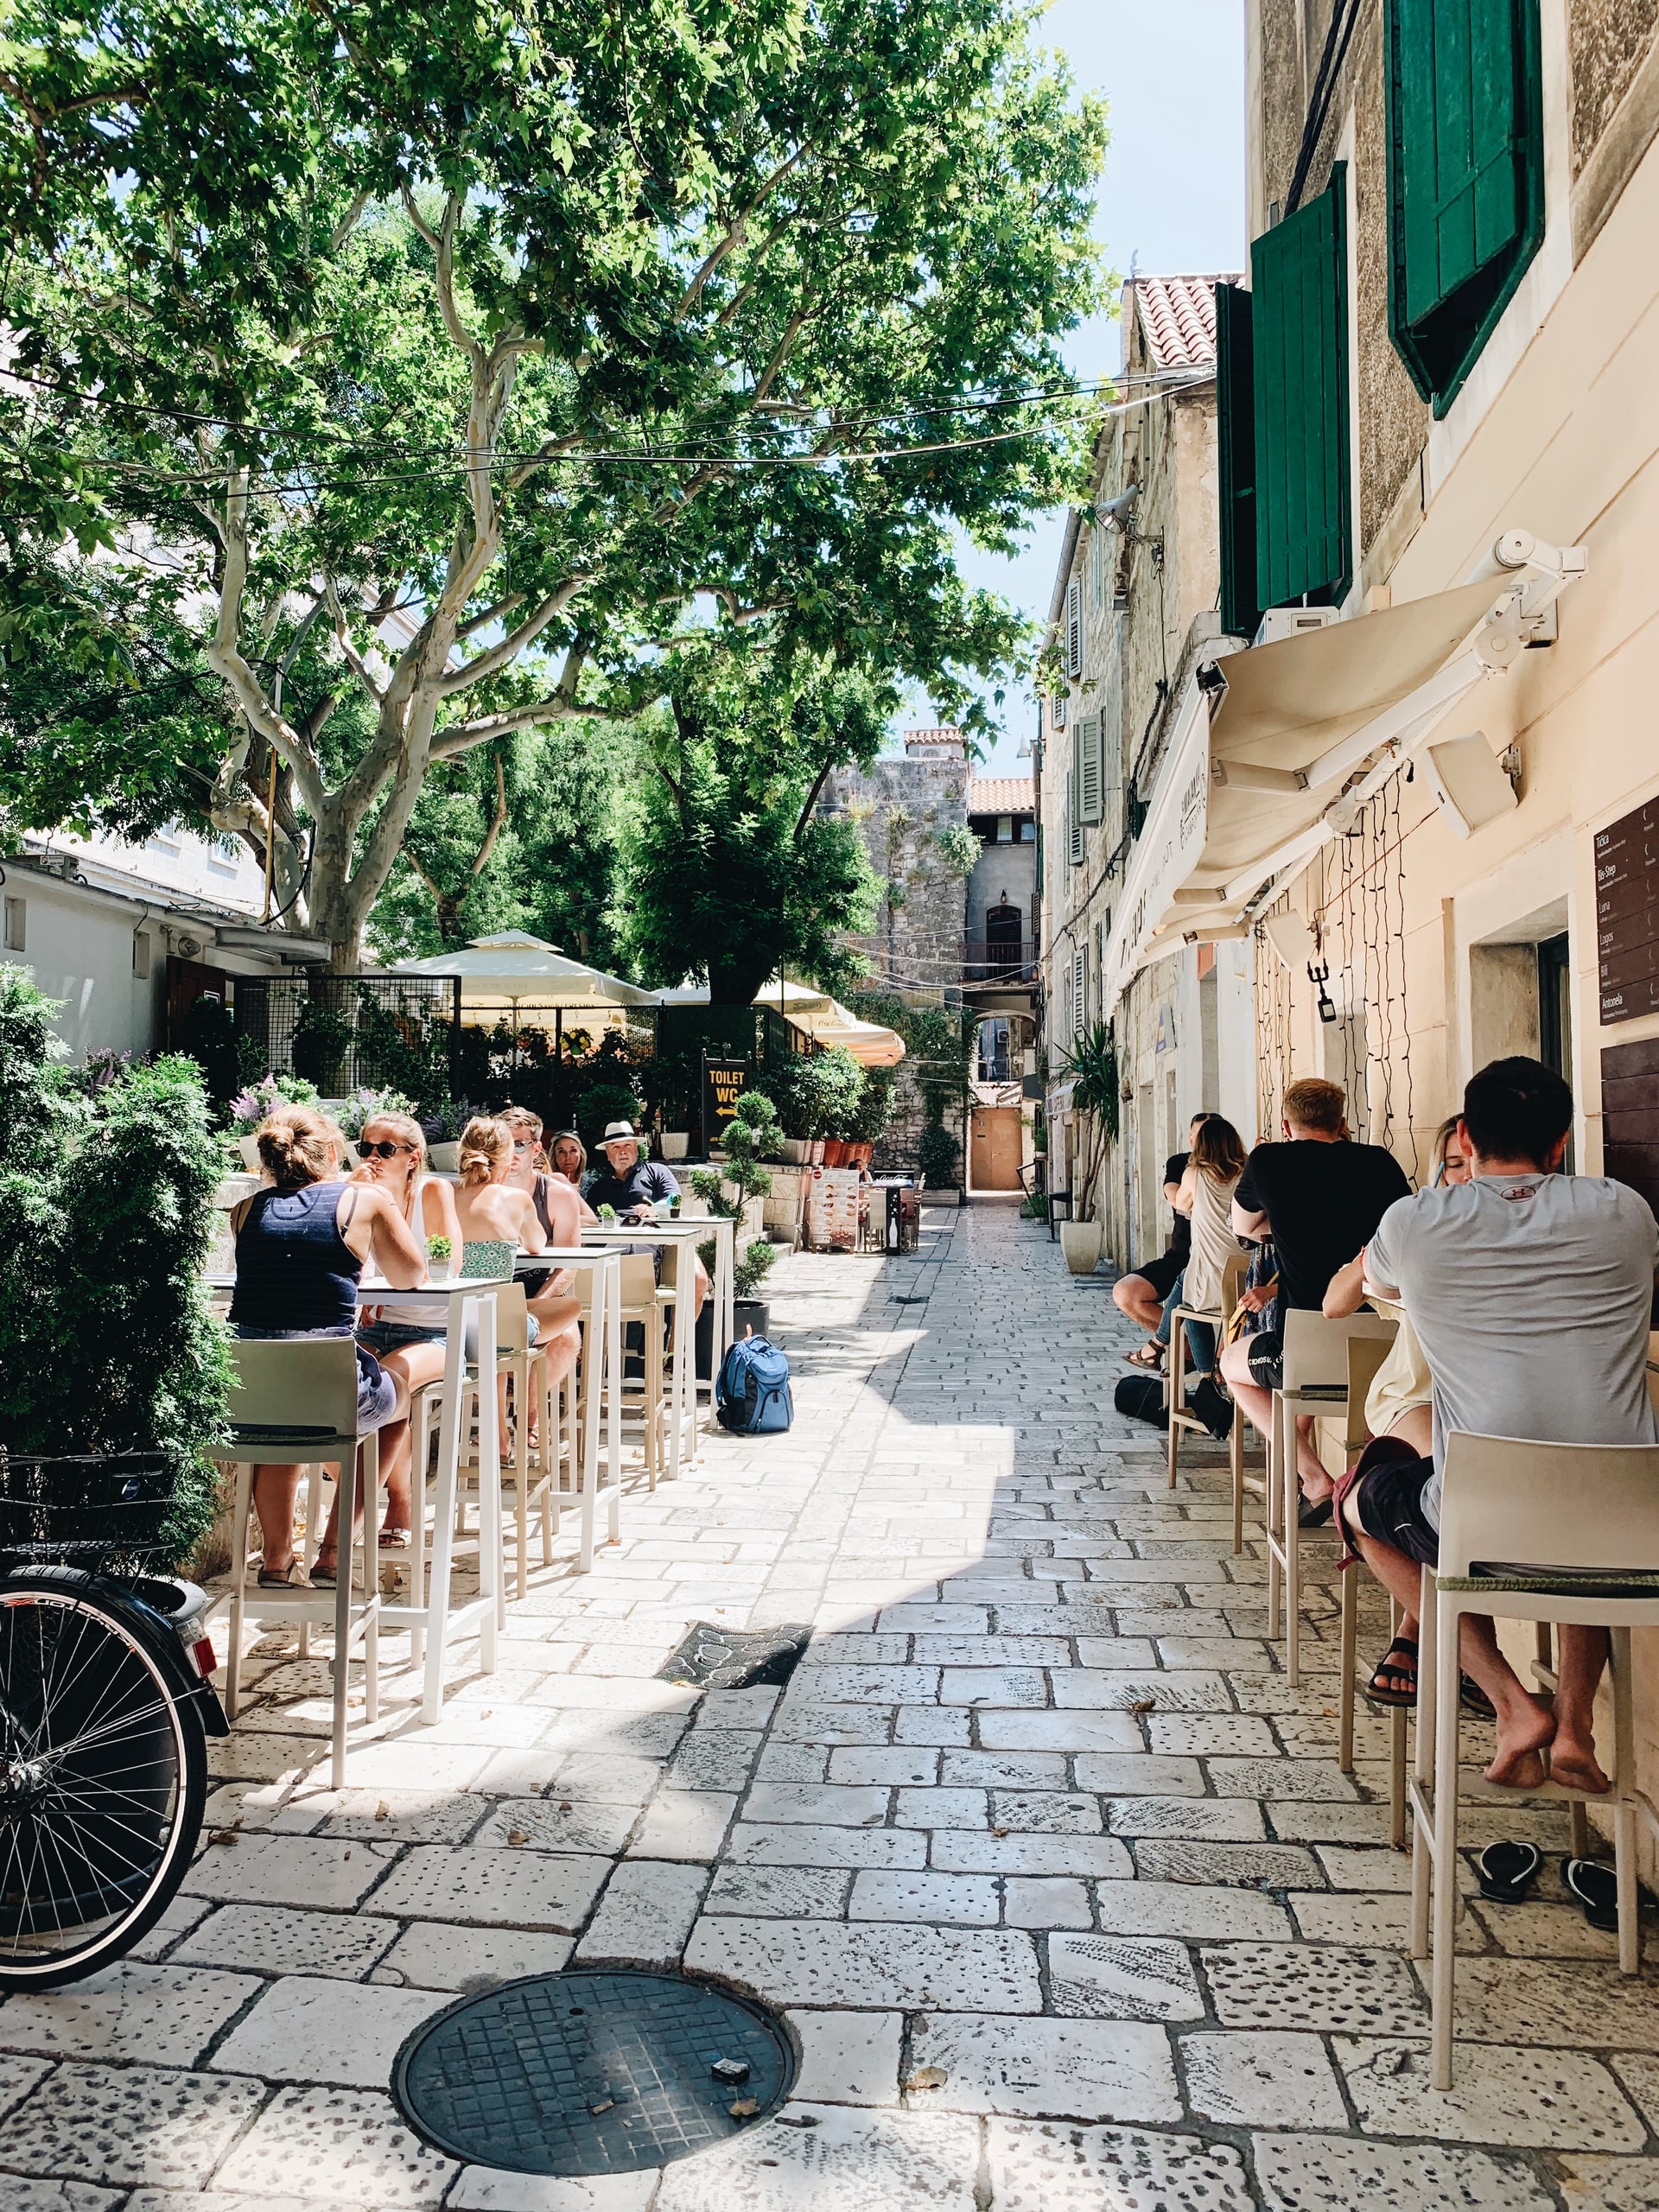 Eating out in Split, Croatia